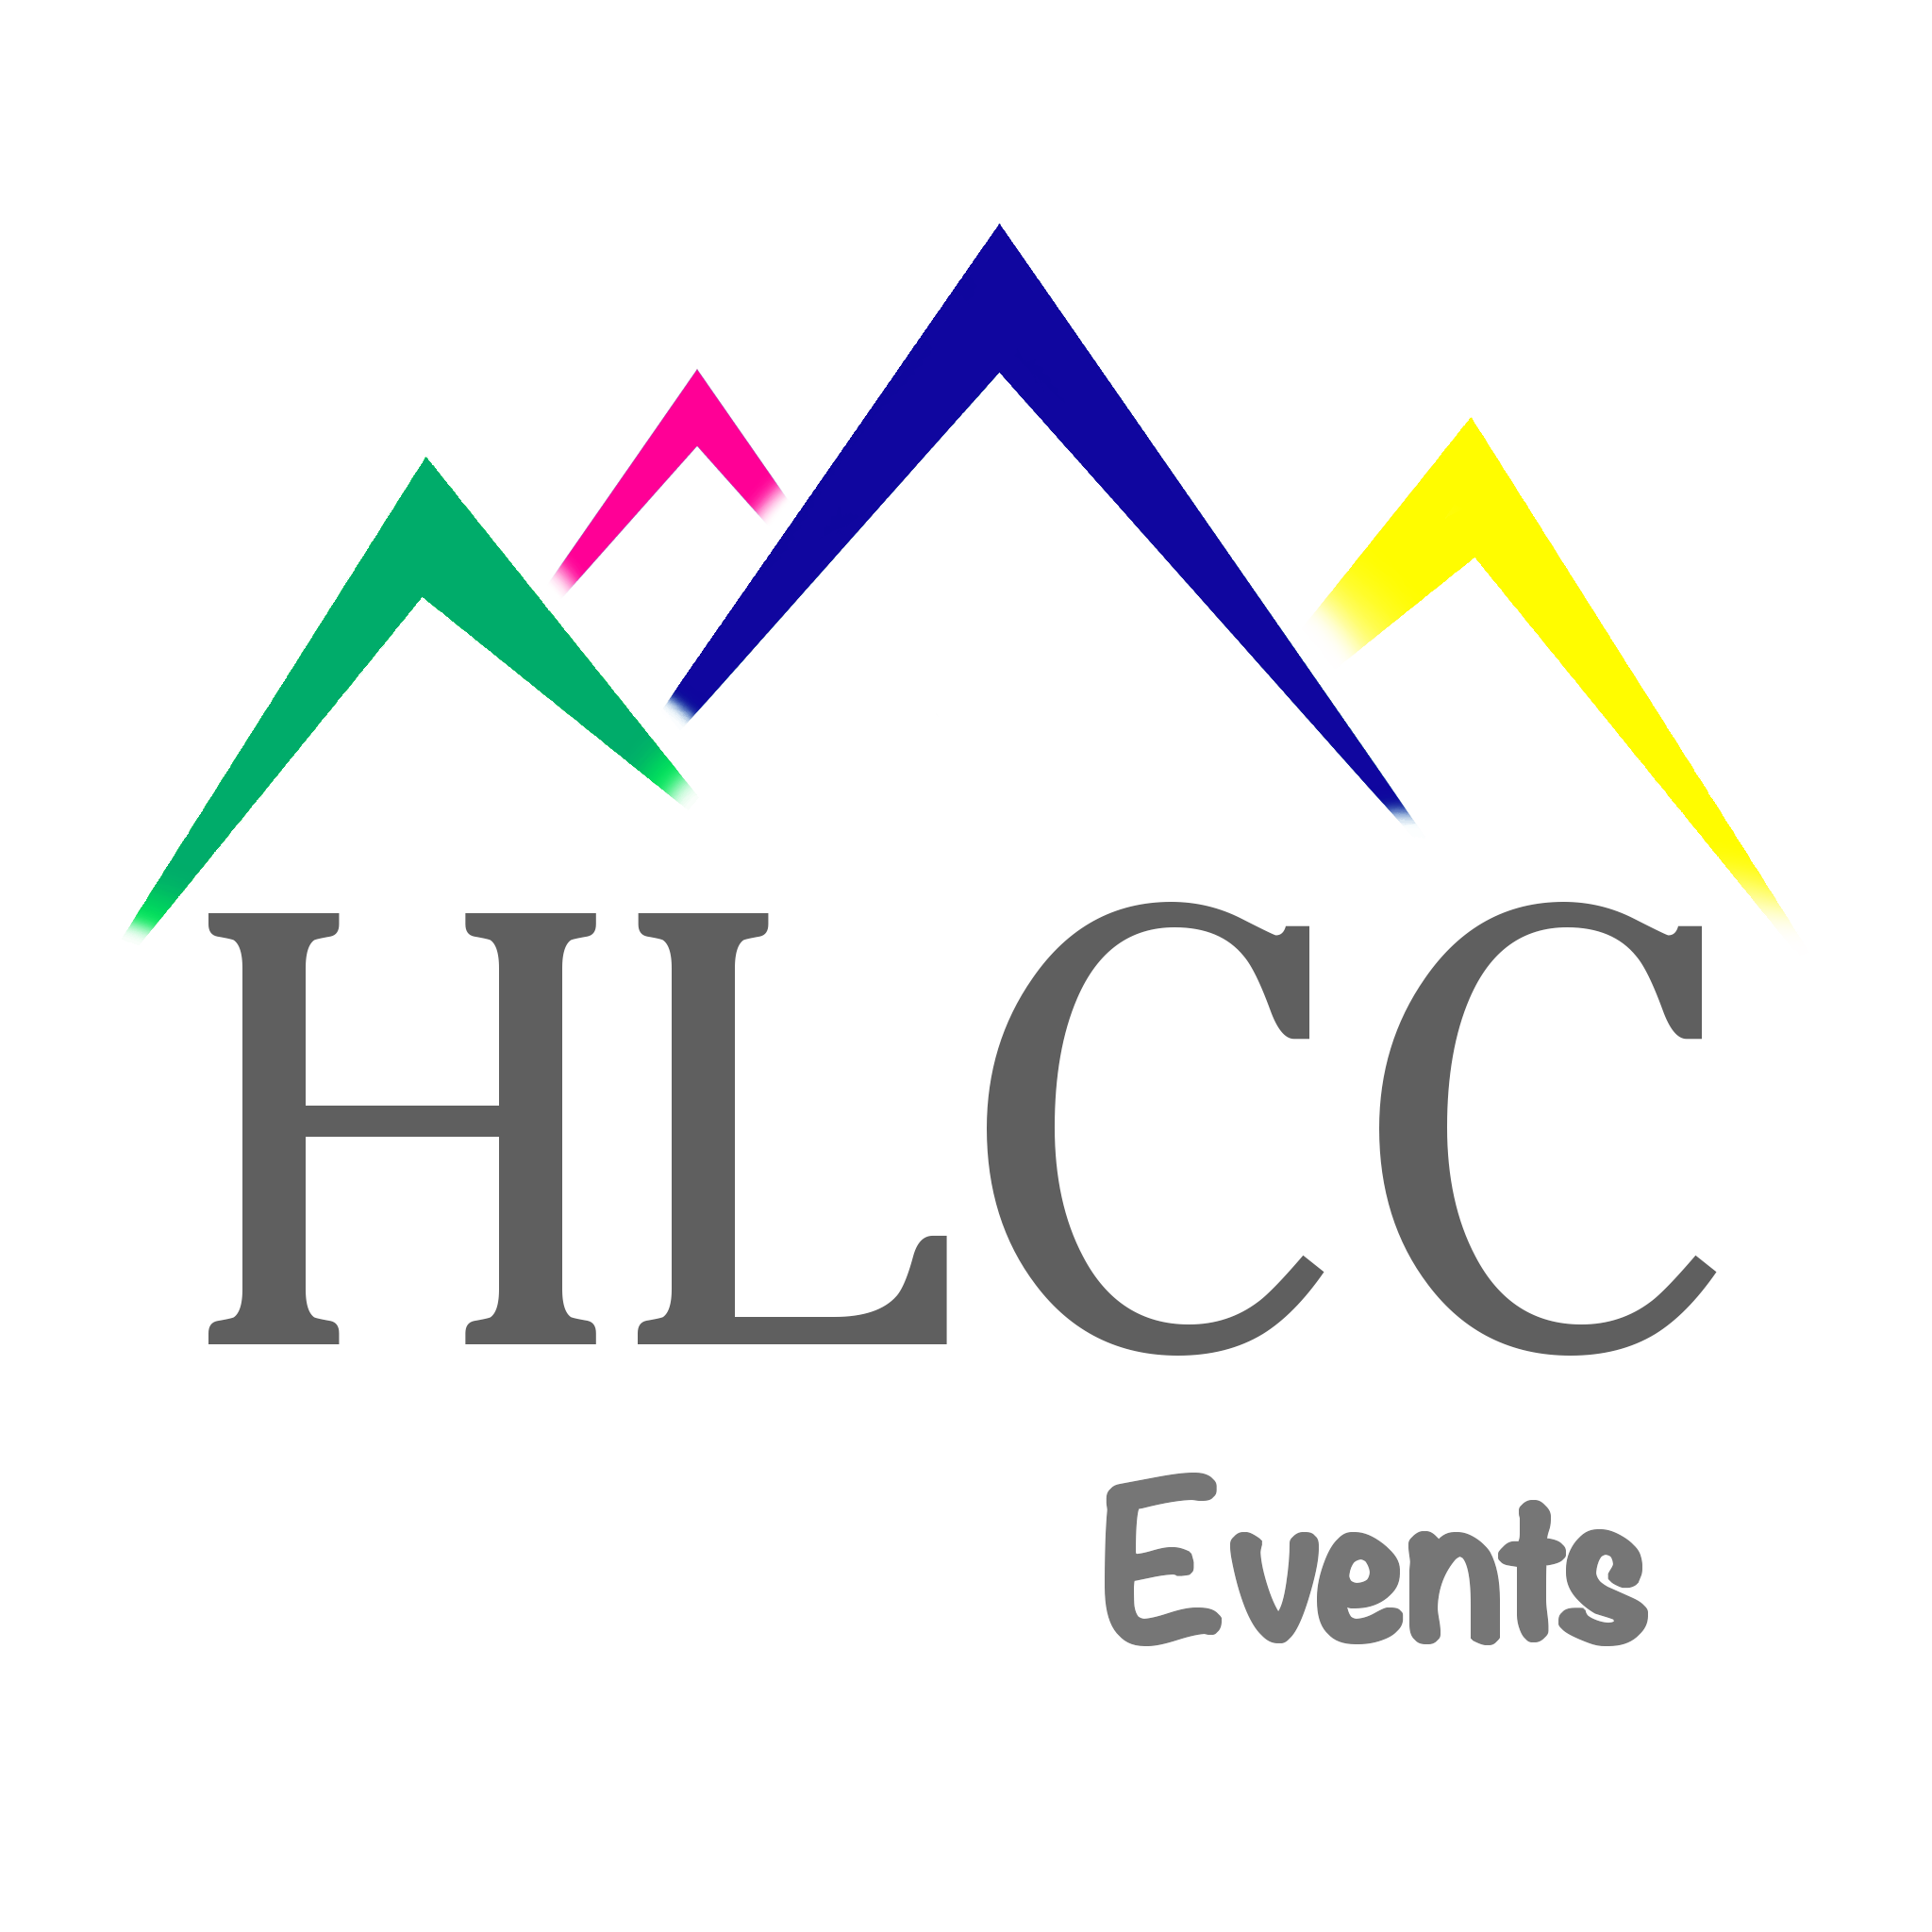 HLCC Events logo